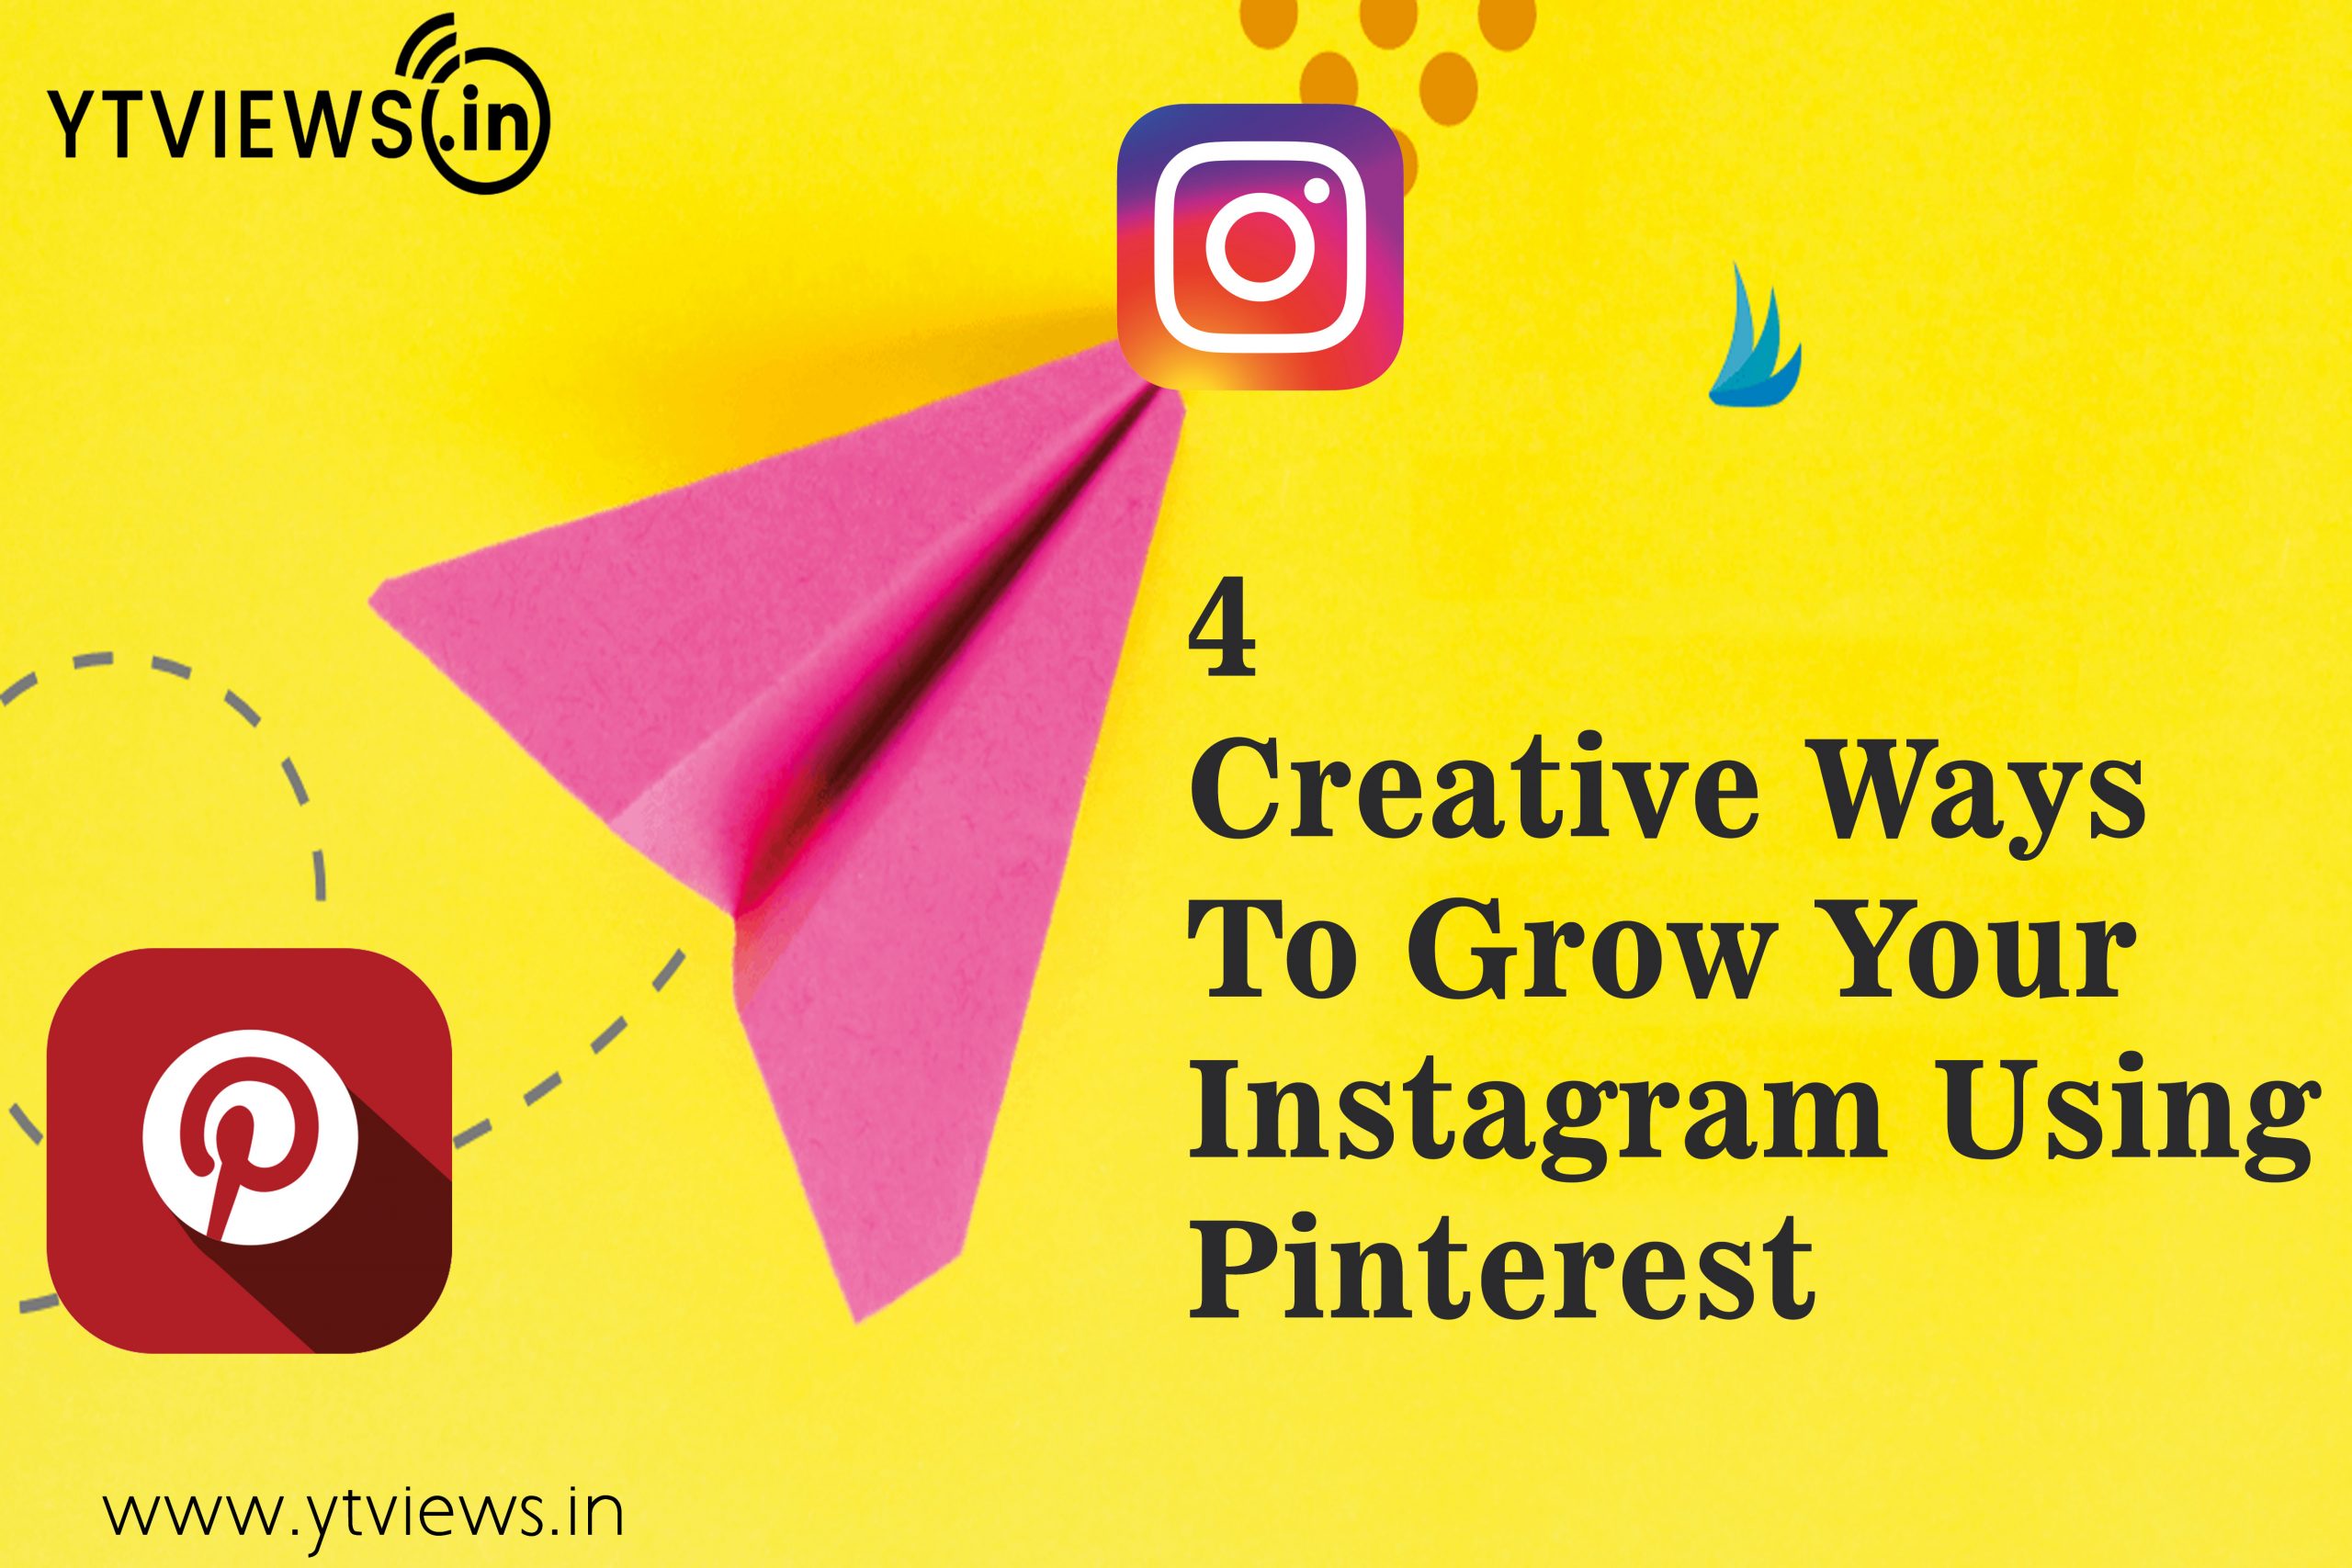 4 creative ways to grow your Instagram using Pinterest